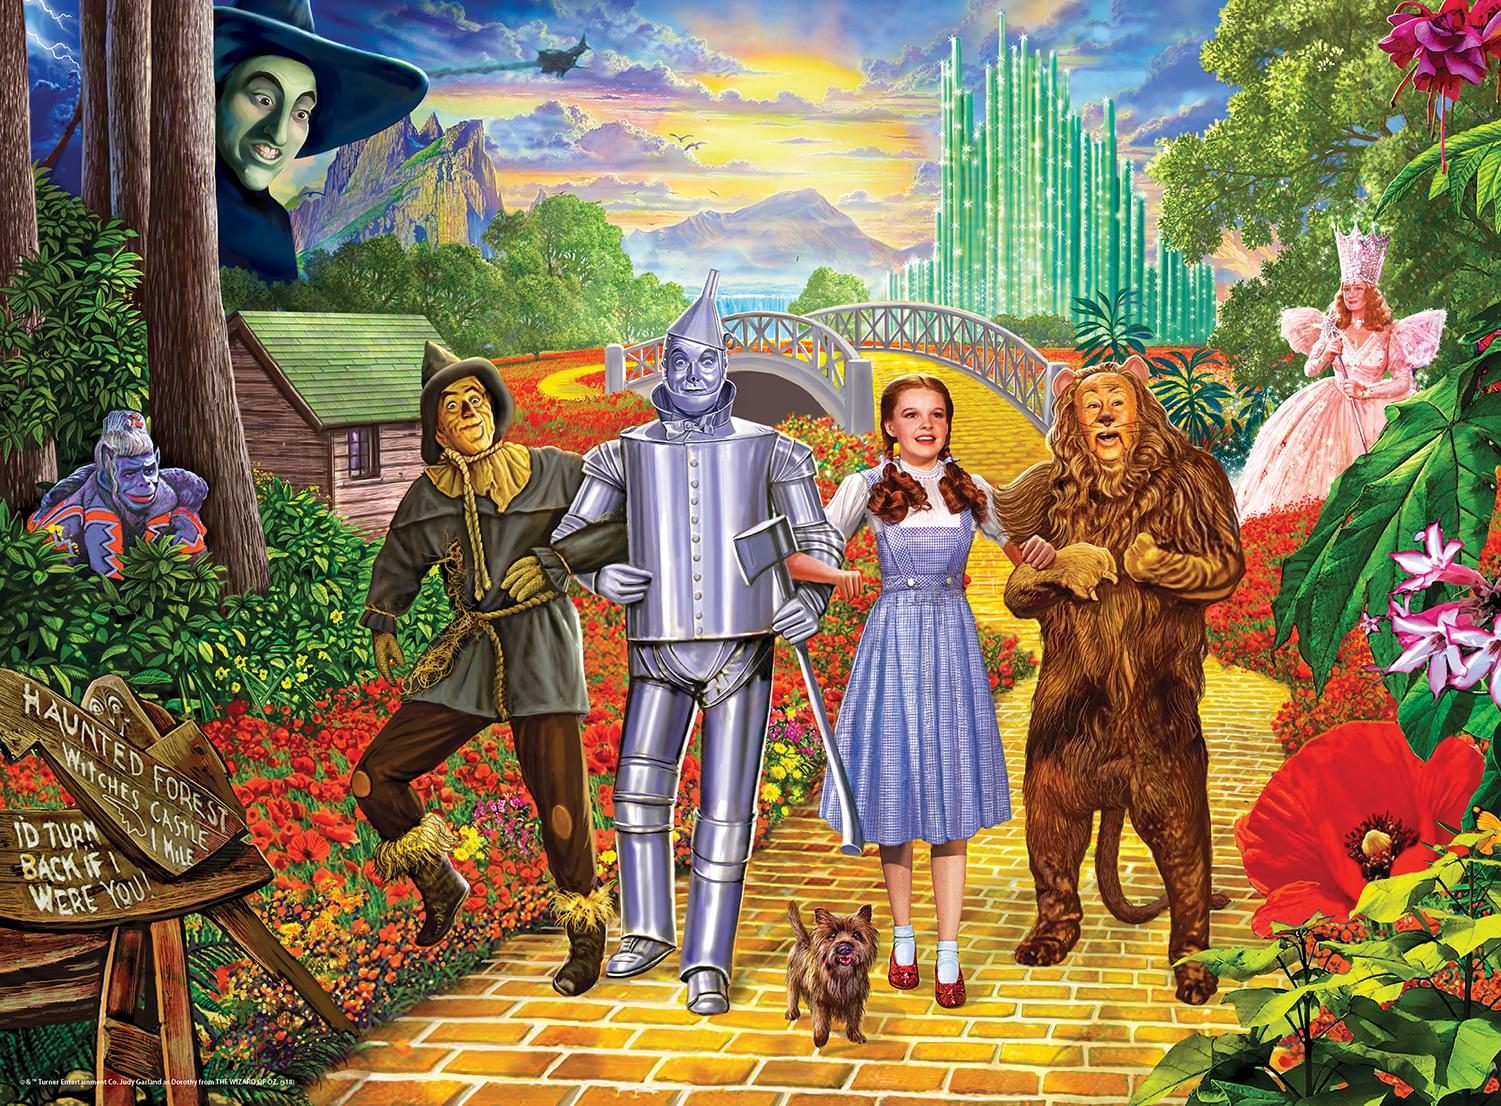 Wizard of Oz Glitter 100 Piece Glitter Jigsaw Puzzle